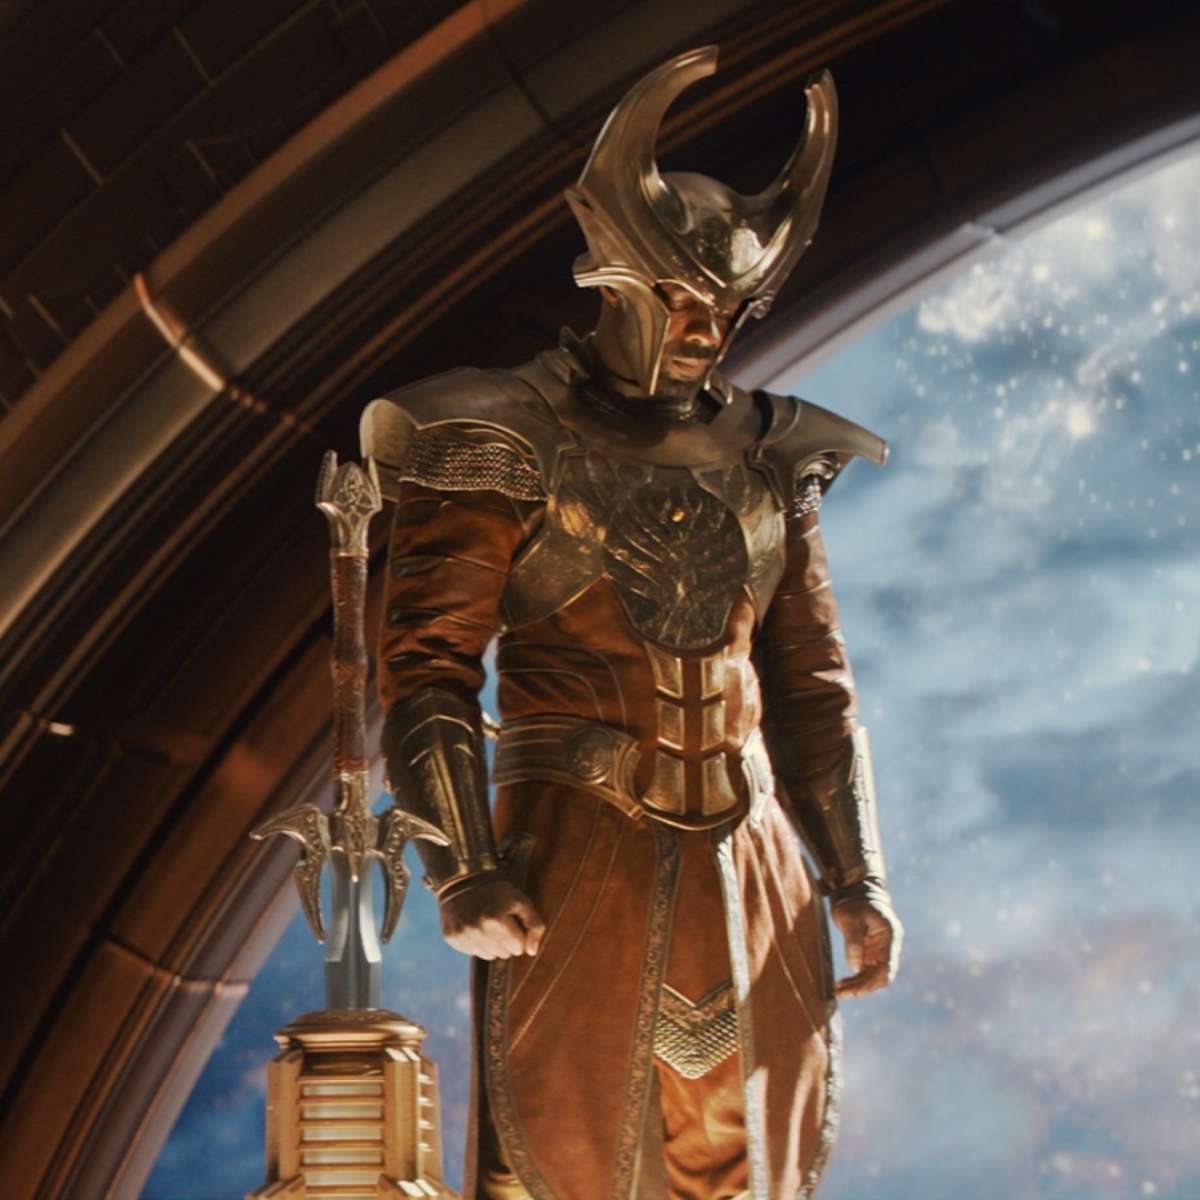 Thor: Chris Hemsworth define seu futuro na Marvel - Cinema